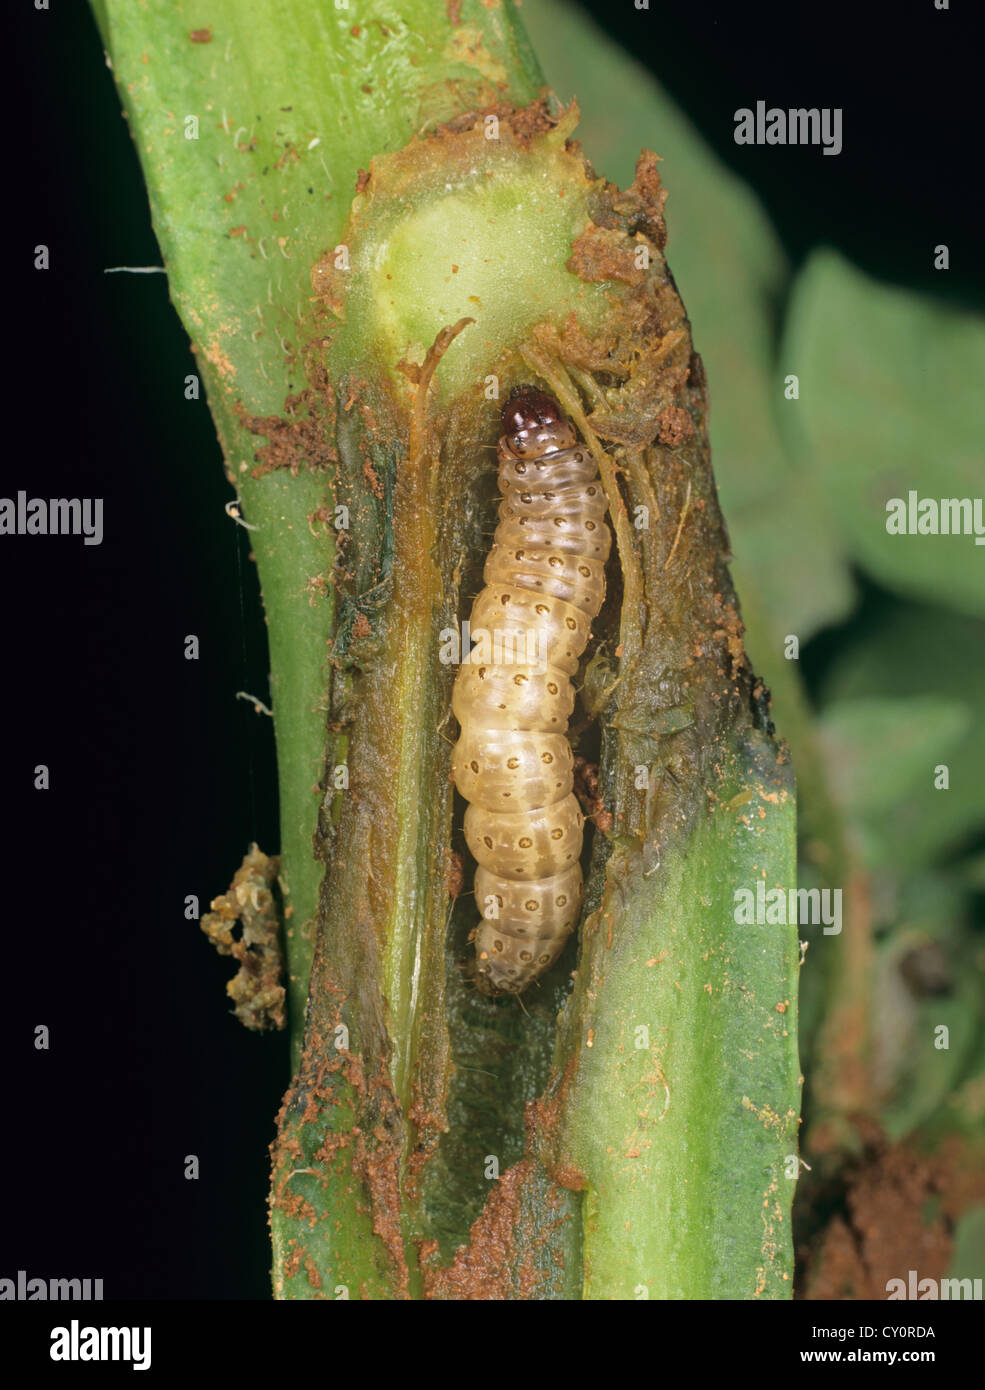 European corn borer, Ostrinia nubialis, caterpillar in damaged potato stem Stock Photo